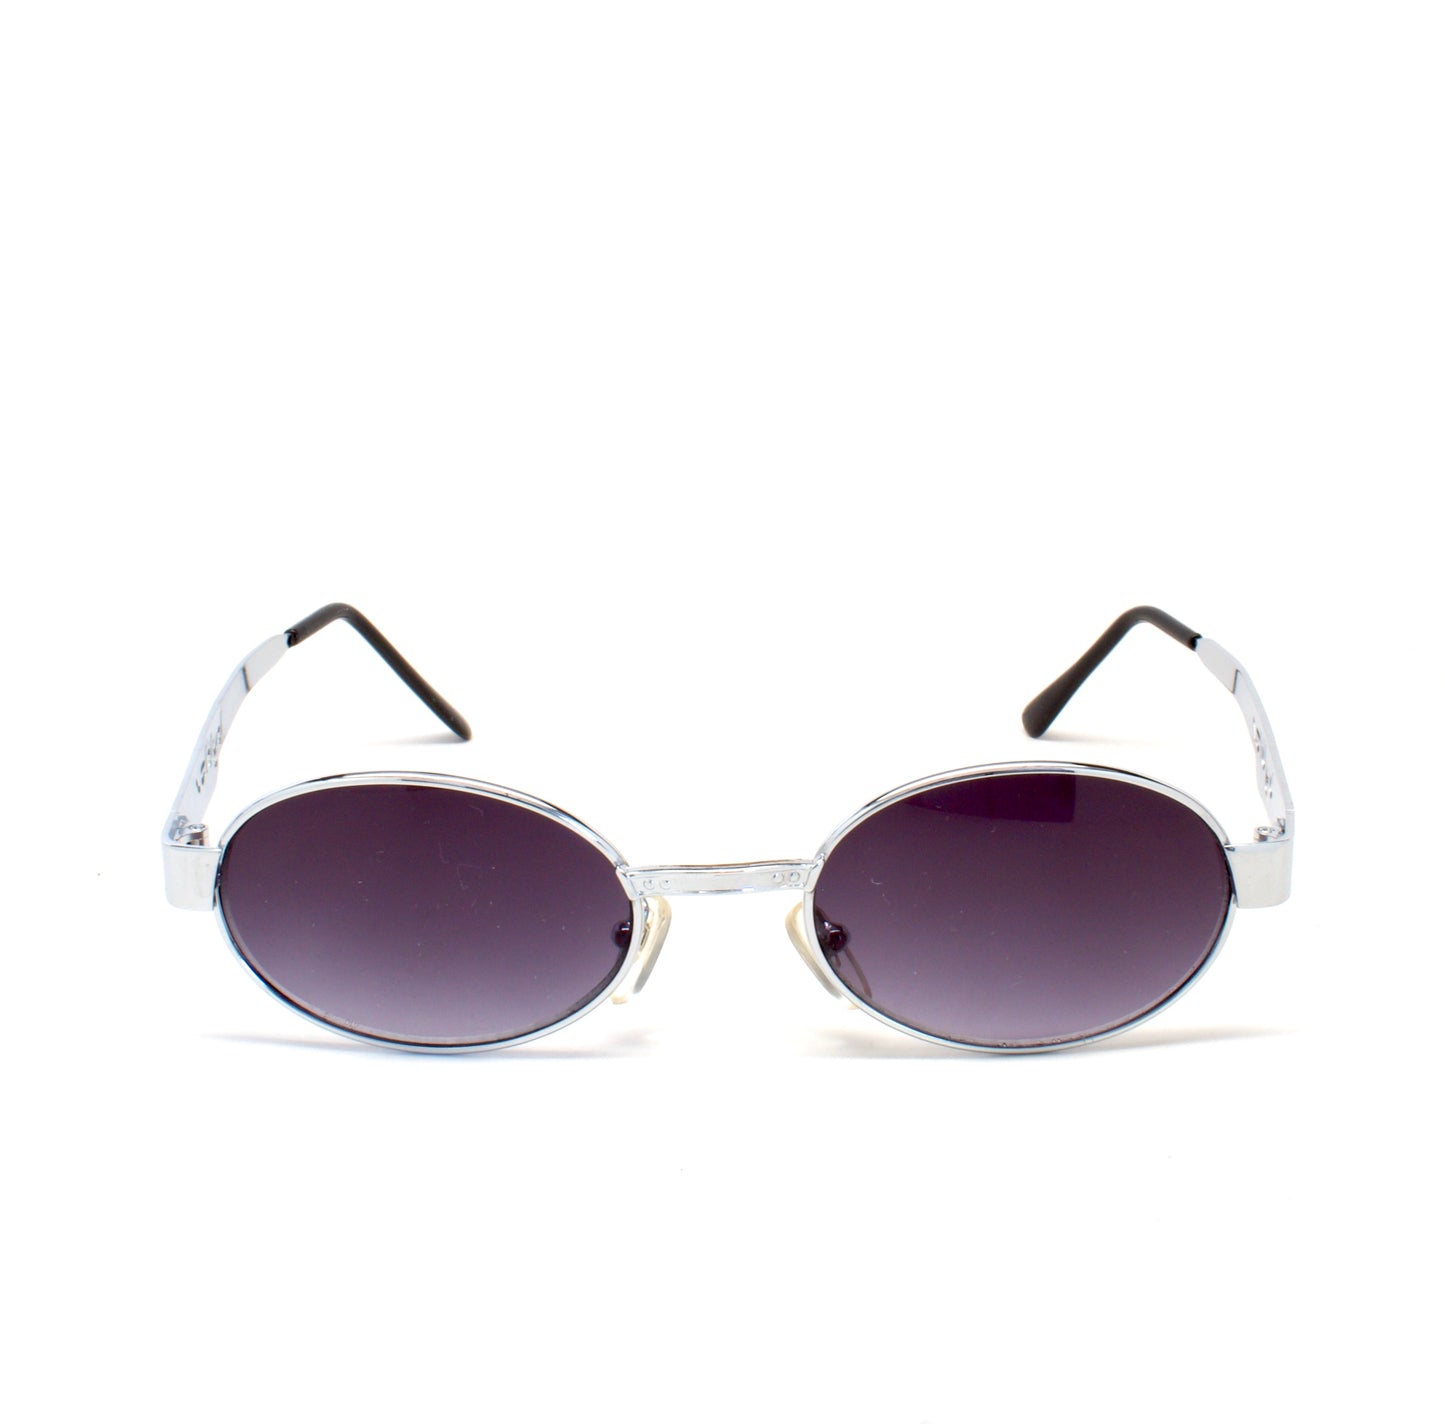 Deadstock Vintage Standard Size Santa Fe Oval Sunglasses -Silver